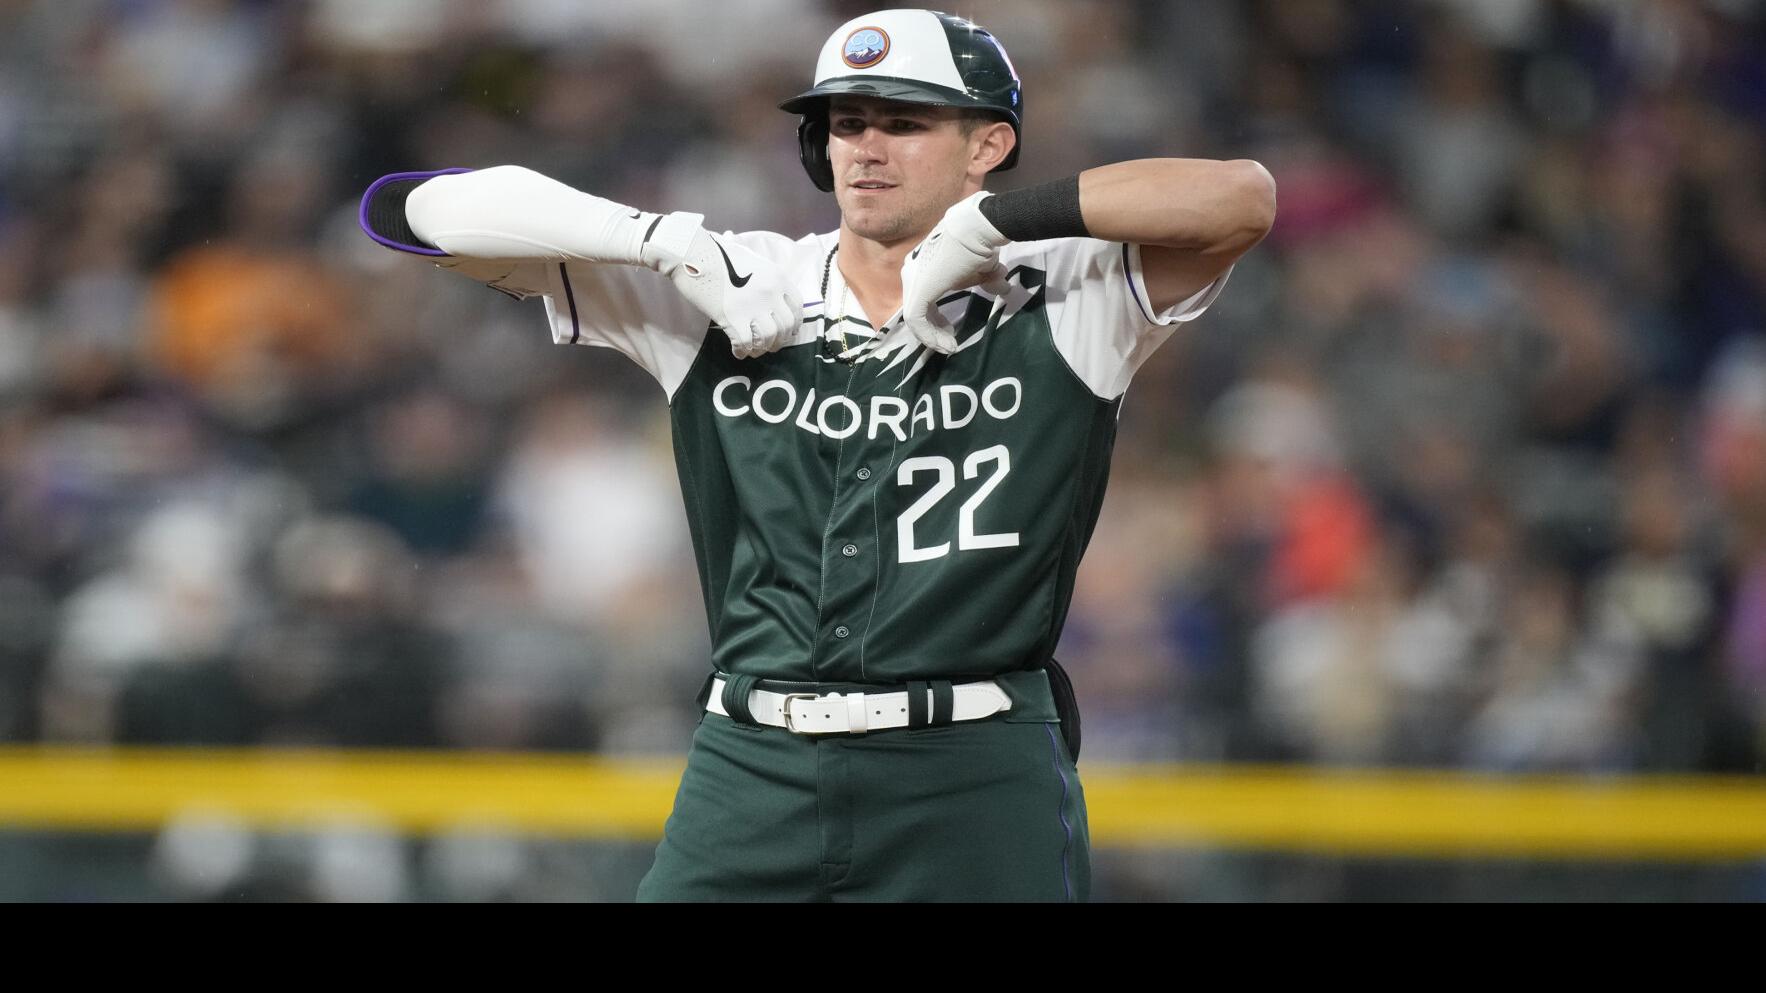 Colorado Rockies Baseball News: The Denver Post Online